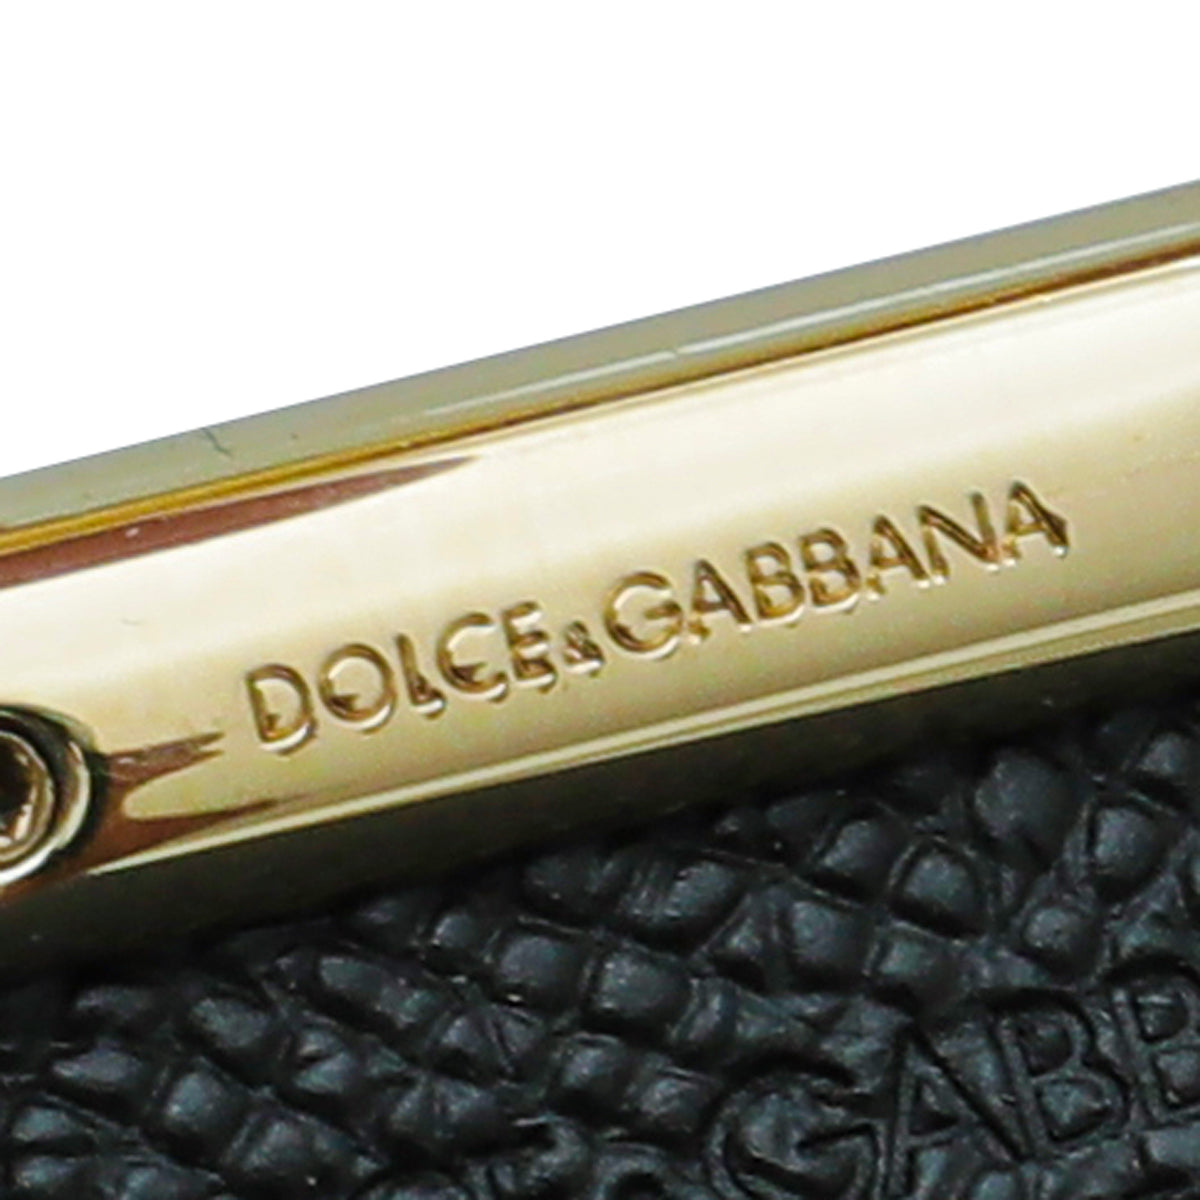 Dolce & Gabbana Bicolor DG Buckle Reversible Belt 30